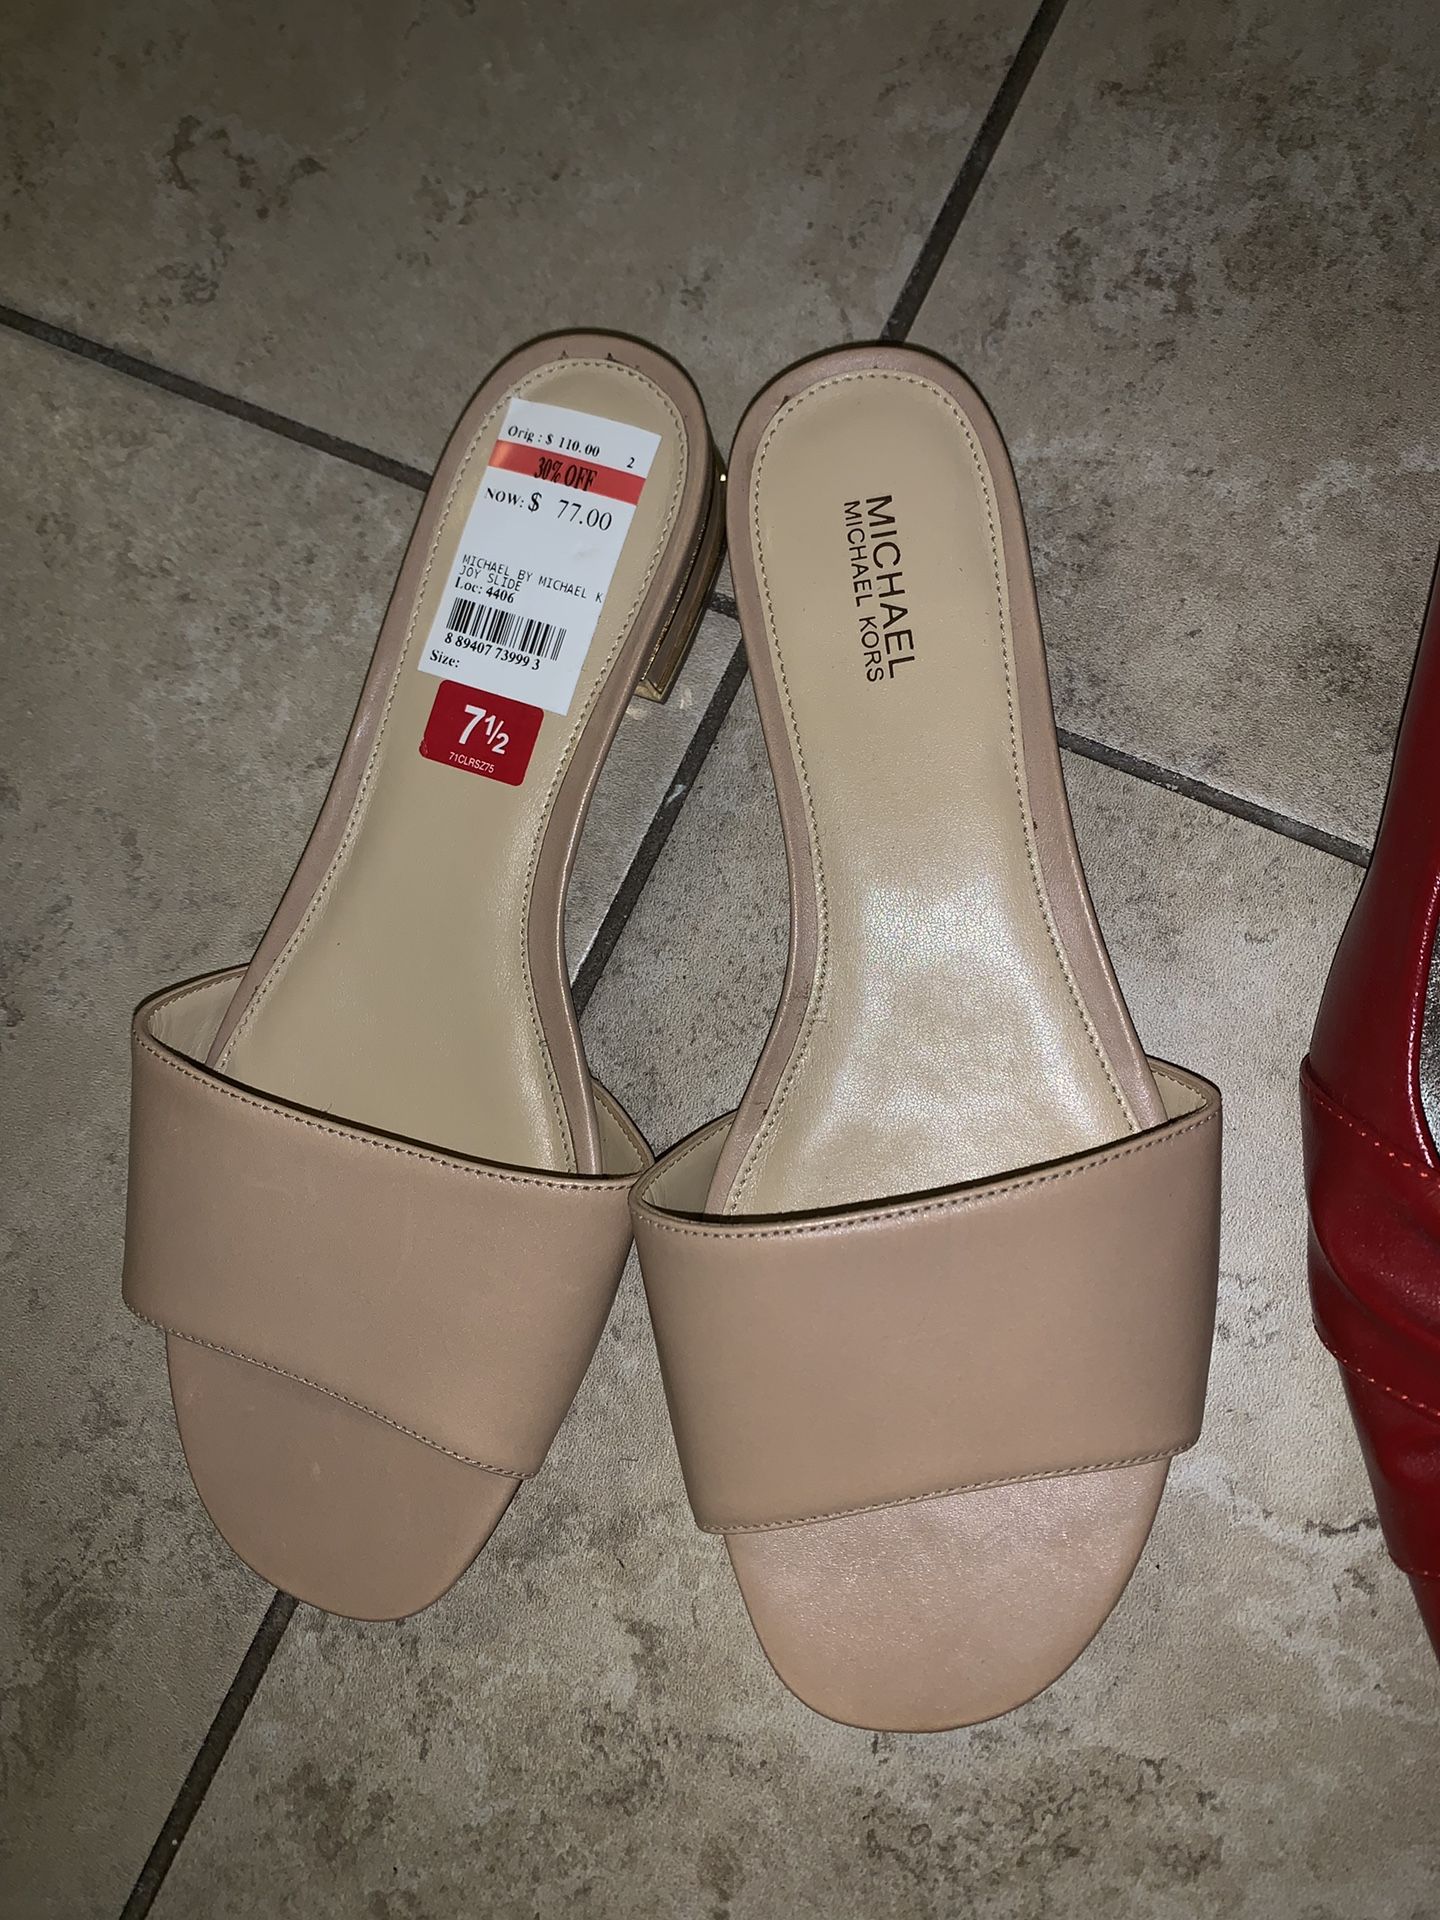 Michael Kors sandal 👡 size 71/2 new